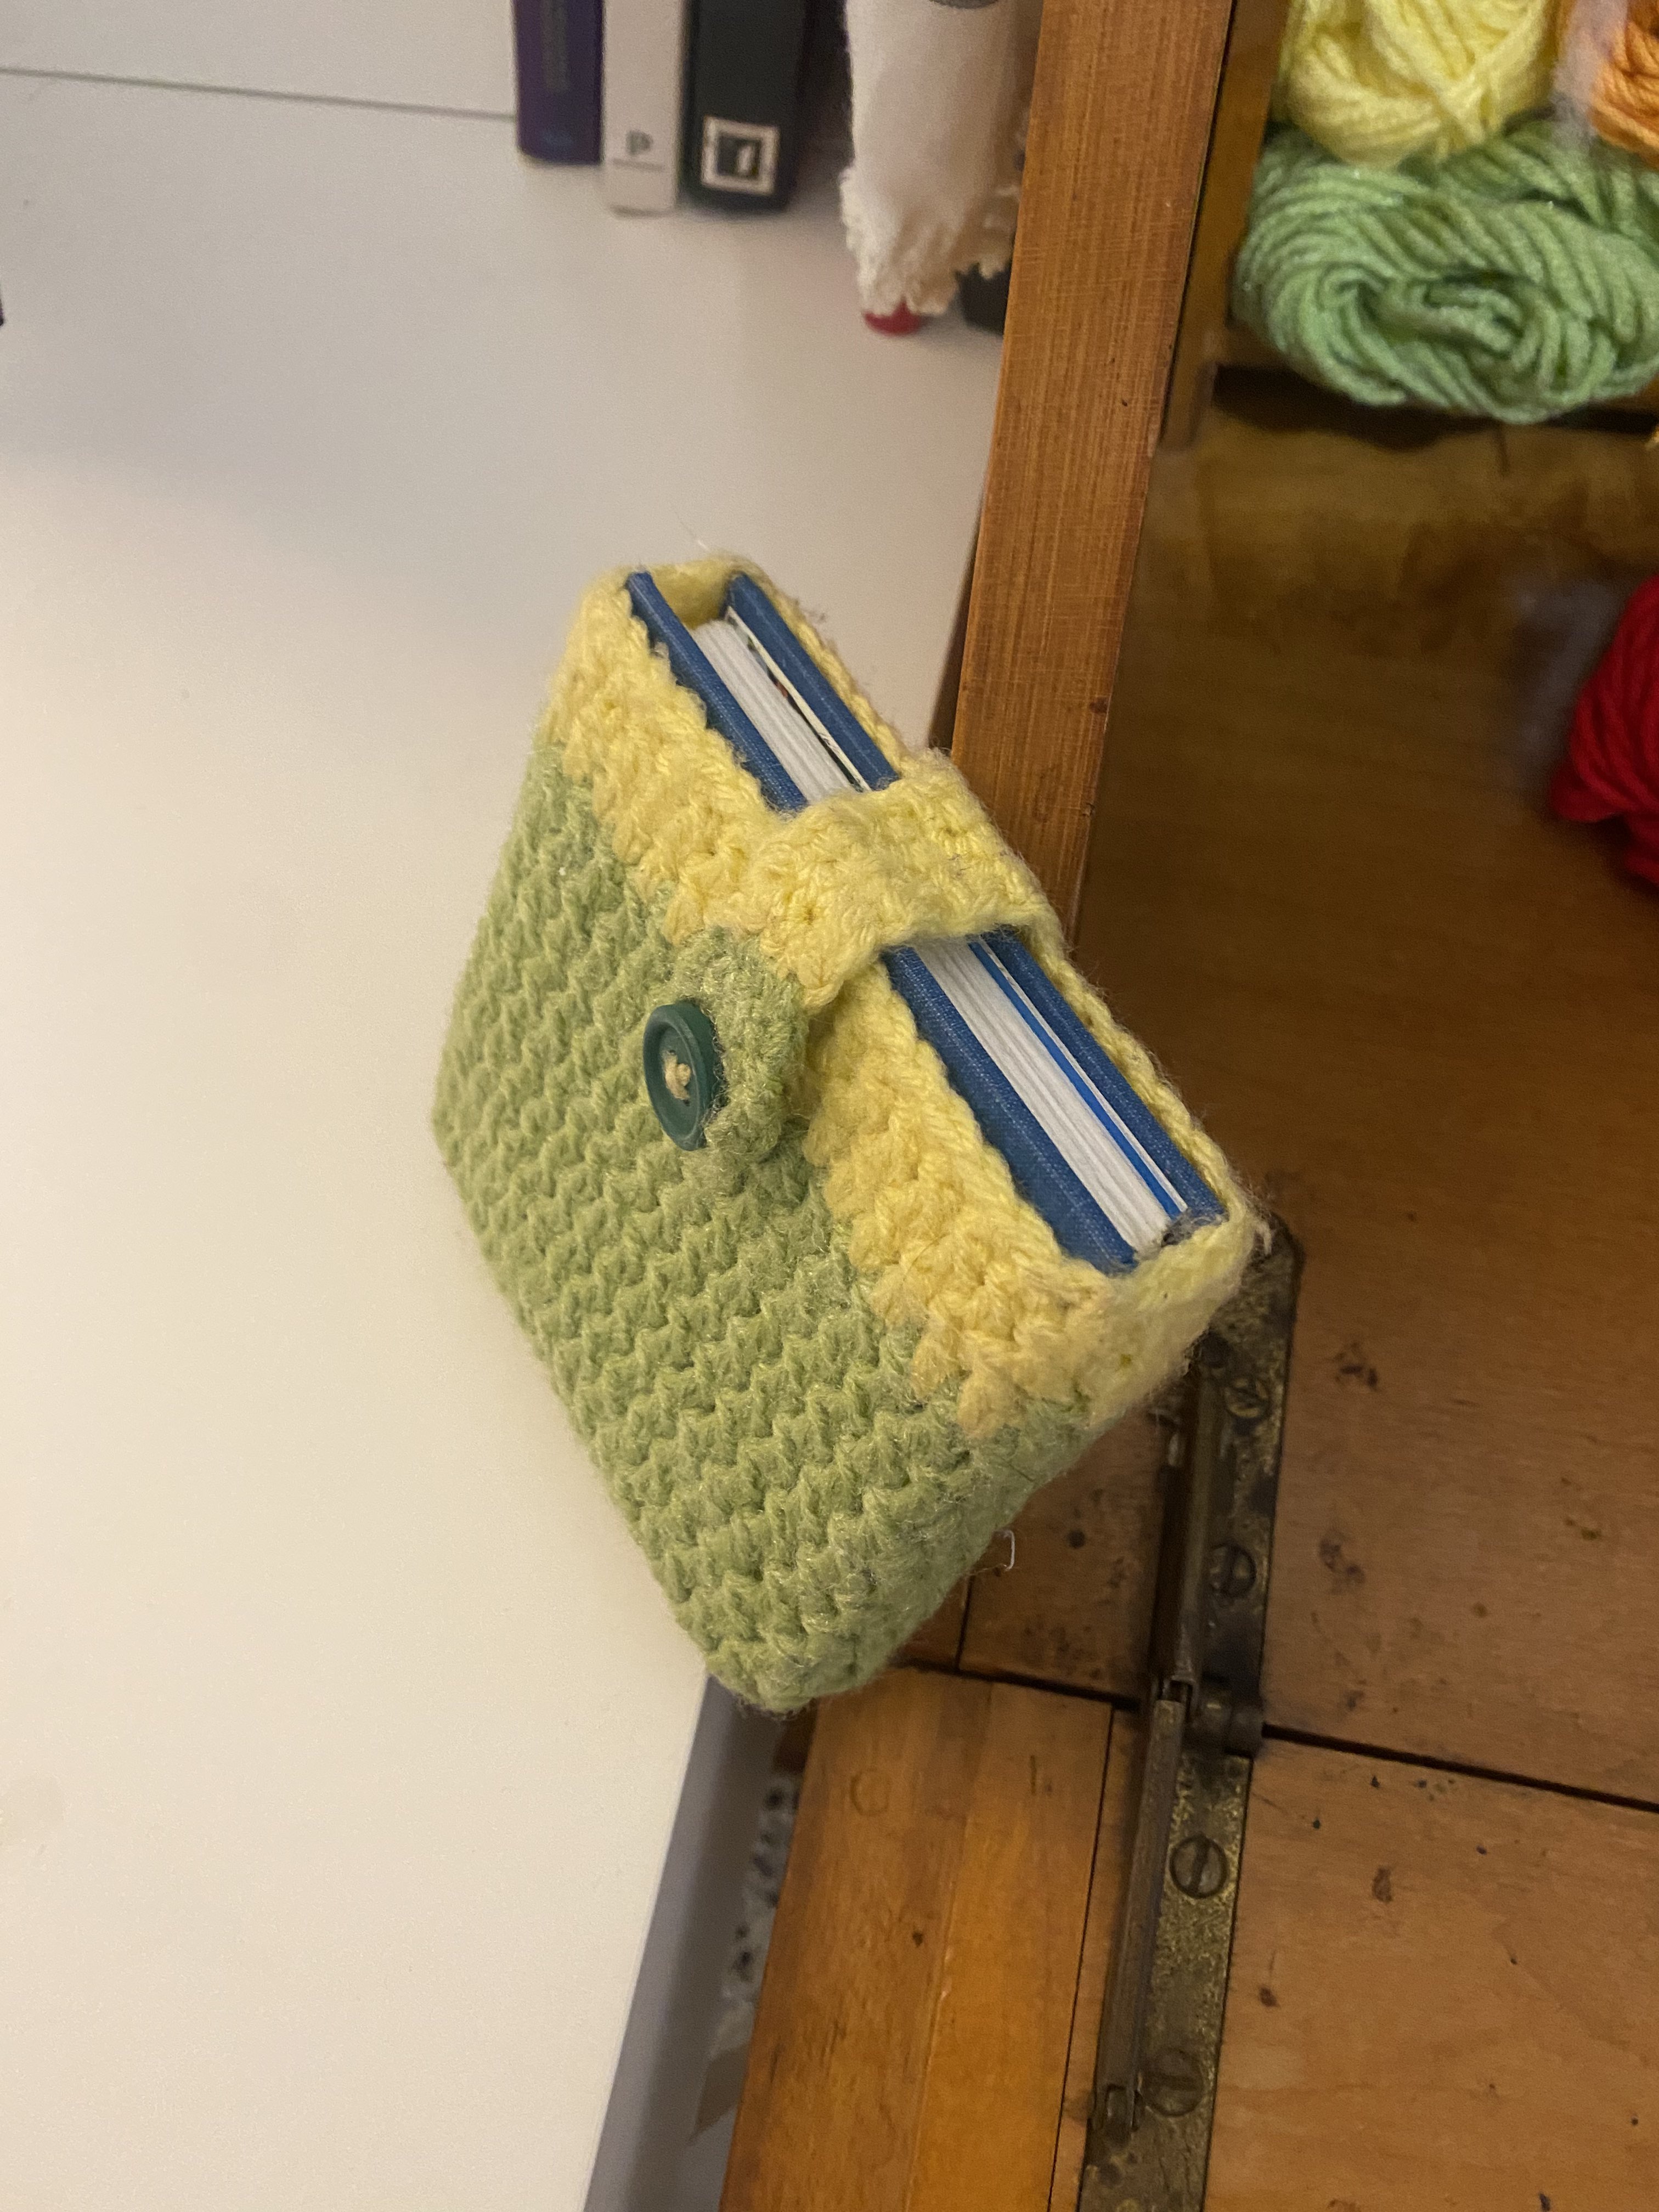 A book inside a crochet cover